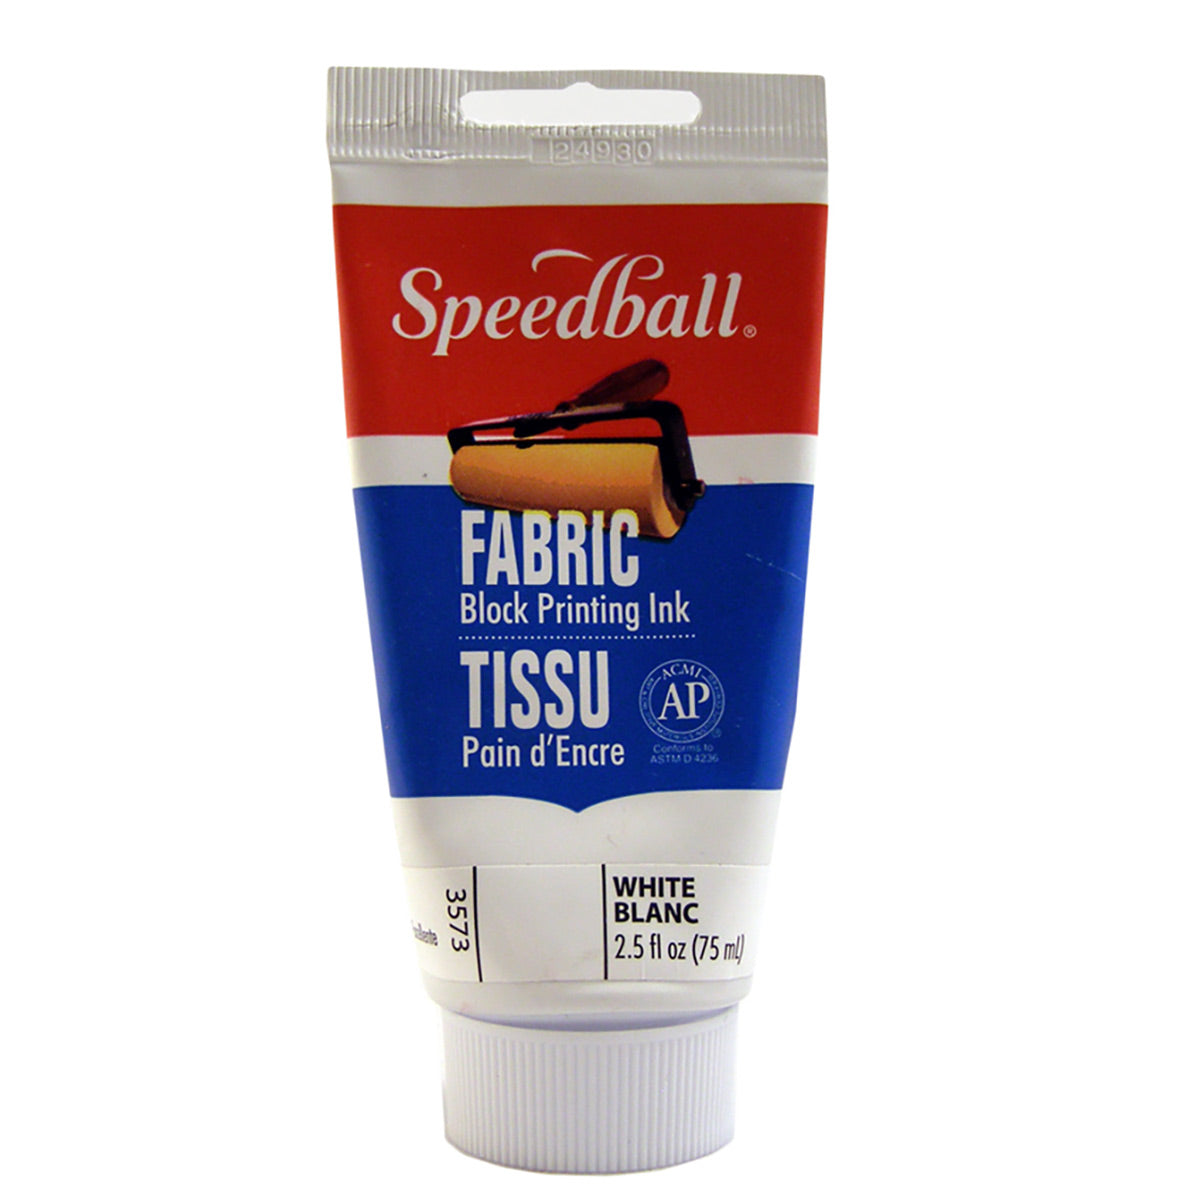 Speedball - Fabric Block Printing Ink 75ml (2.5oz) - White